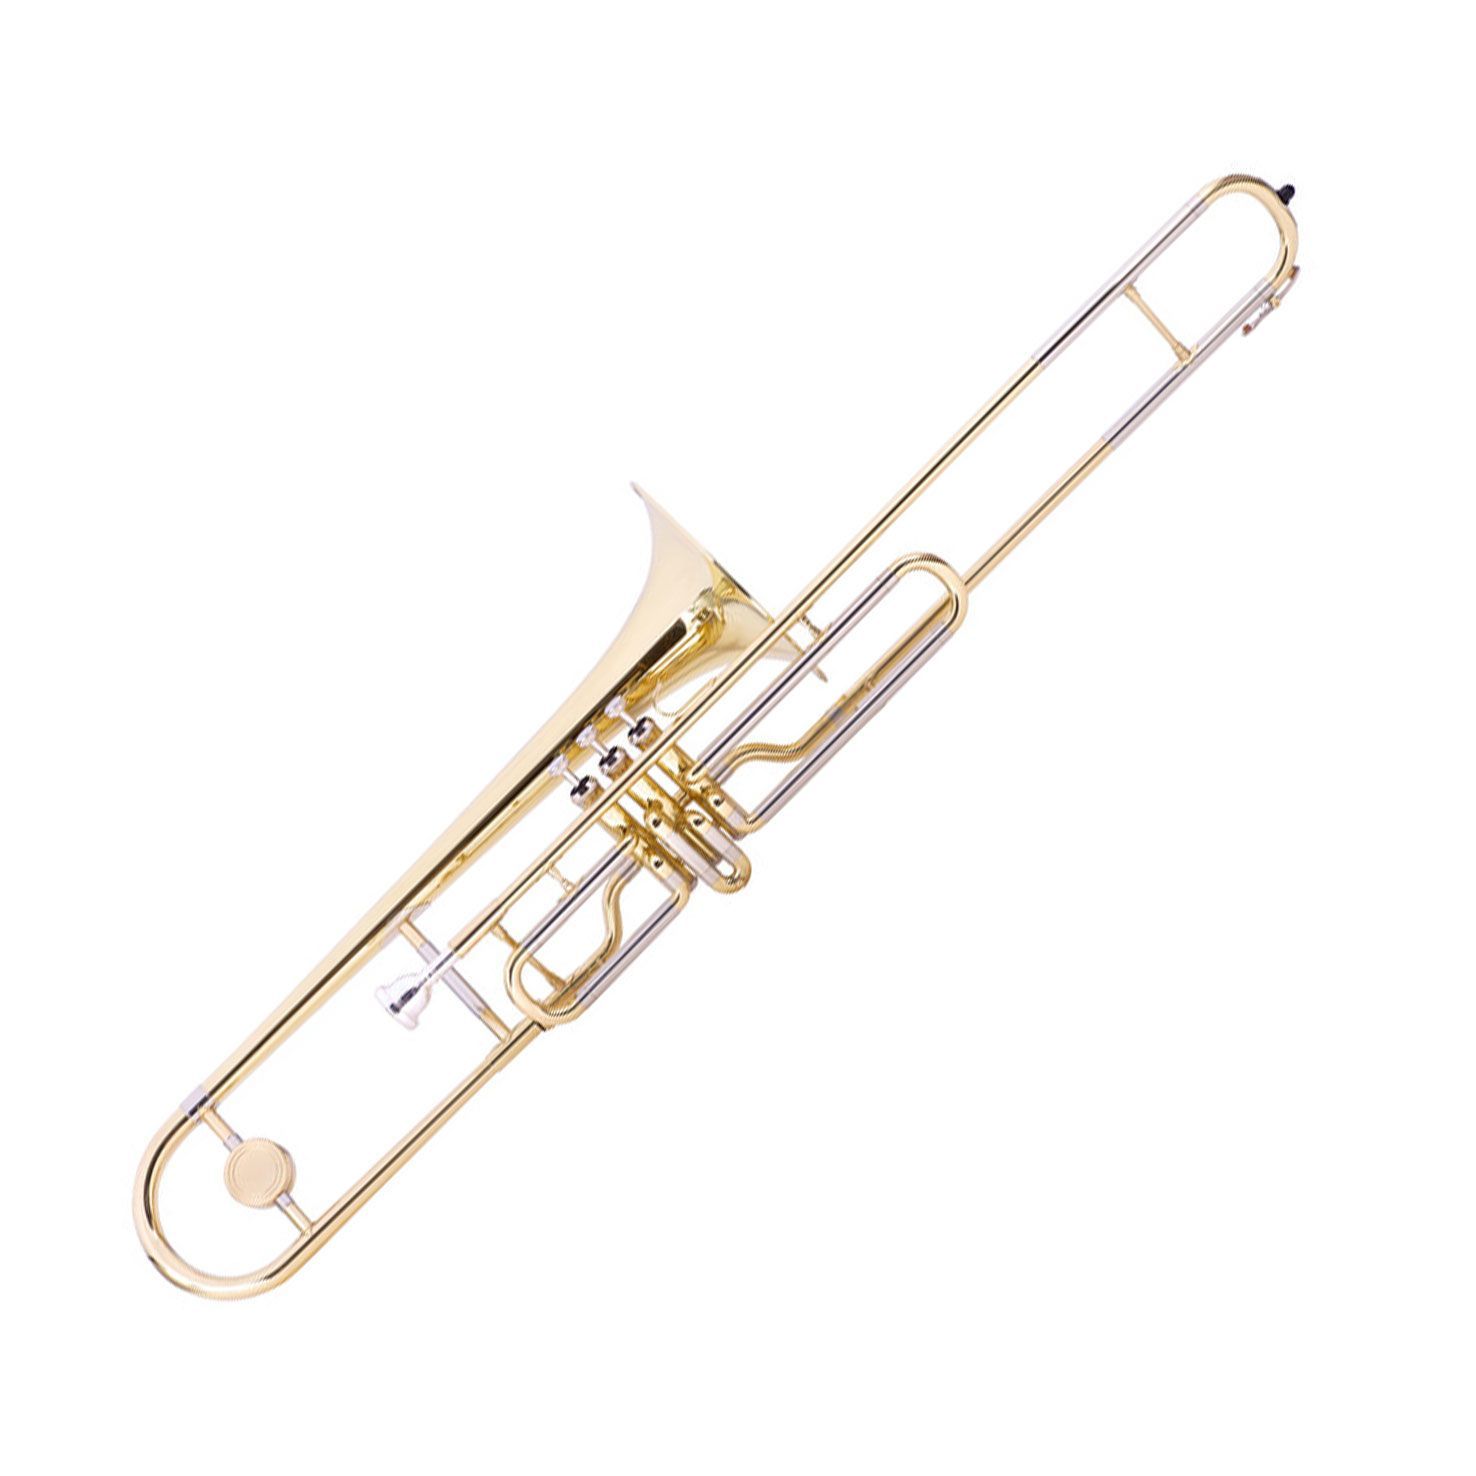 JP135 Valve Trombone